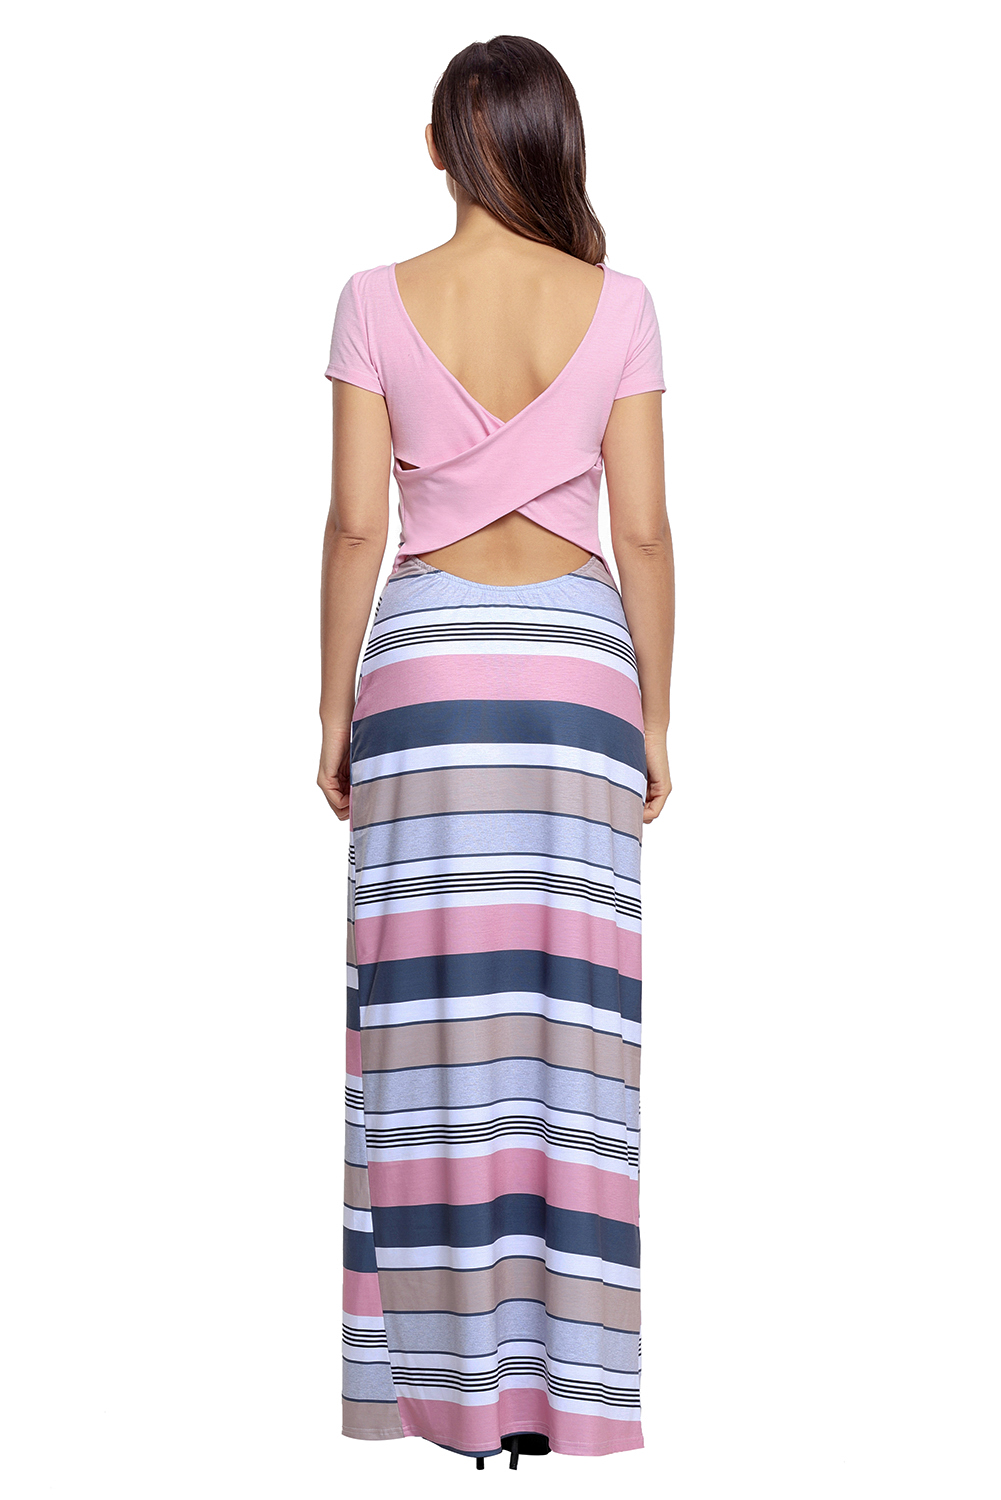 BY61482-10 Pink Crisscross Back Muliticolor Maxi Dress